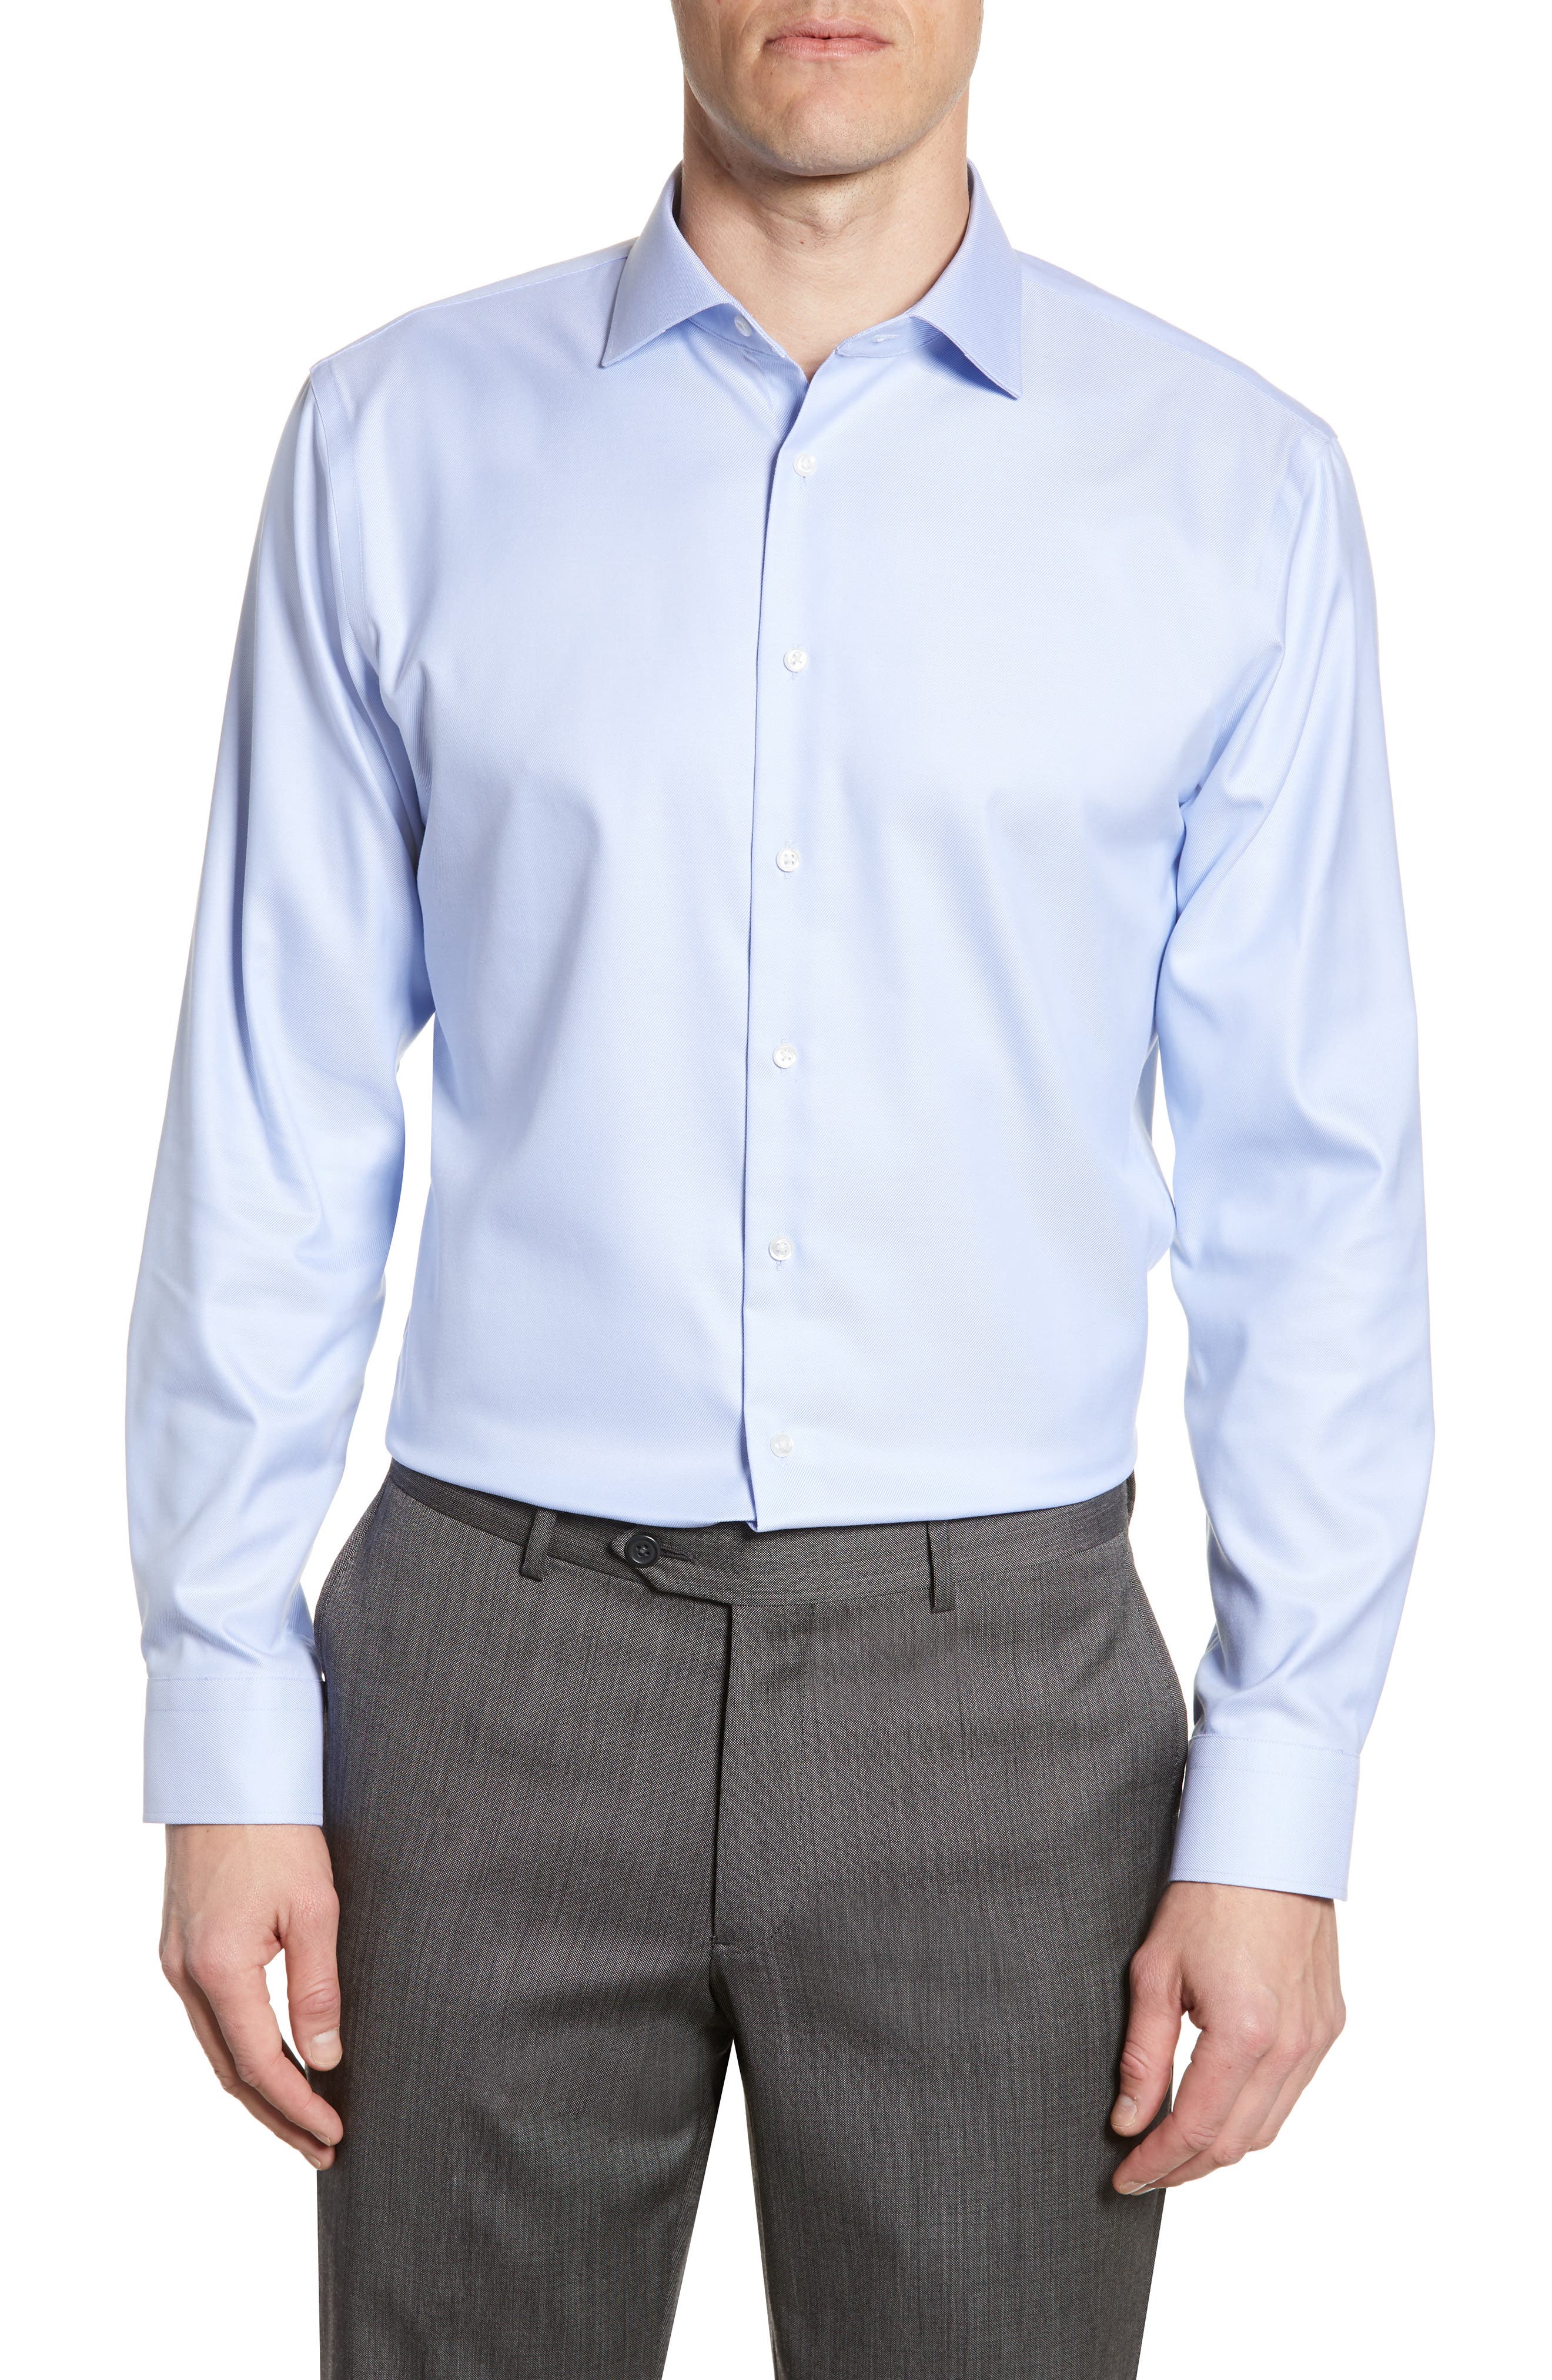 Men's Shirt Non Iron Formal Thick Blue Button Cuff 